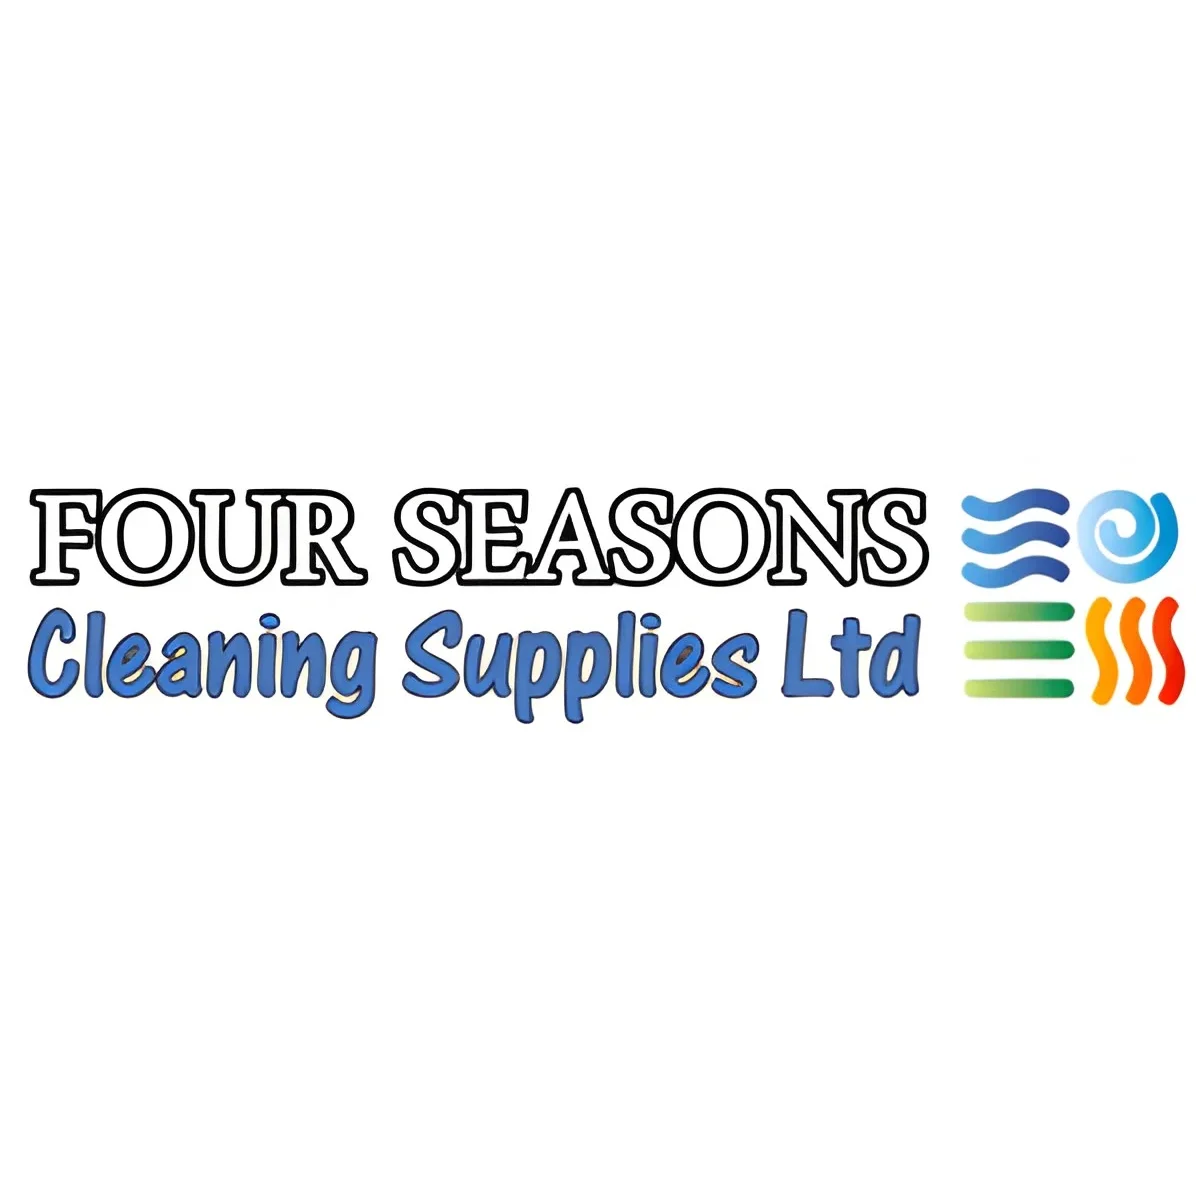 LOGO Four Seasons Cleaning Supplies Ltd Manchester 01616 547220